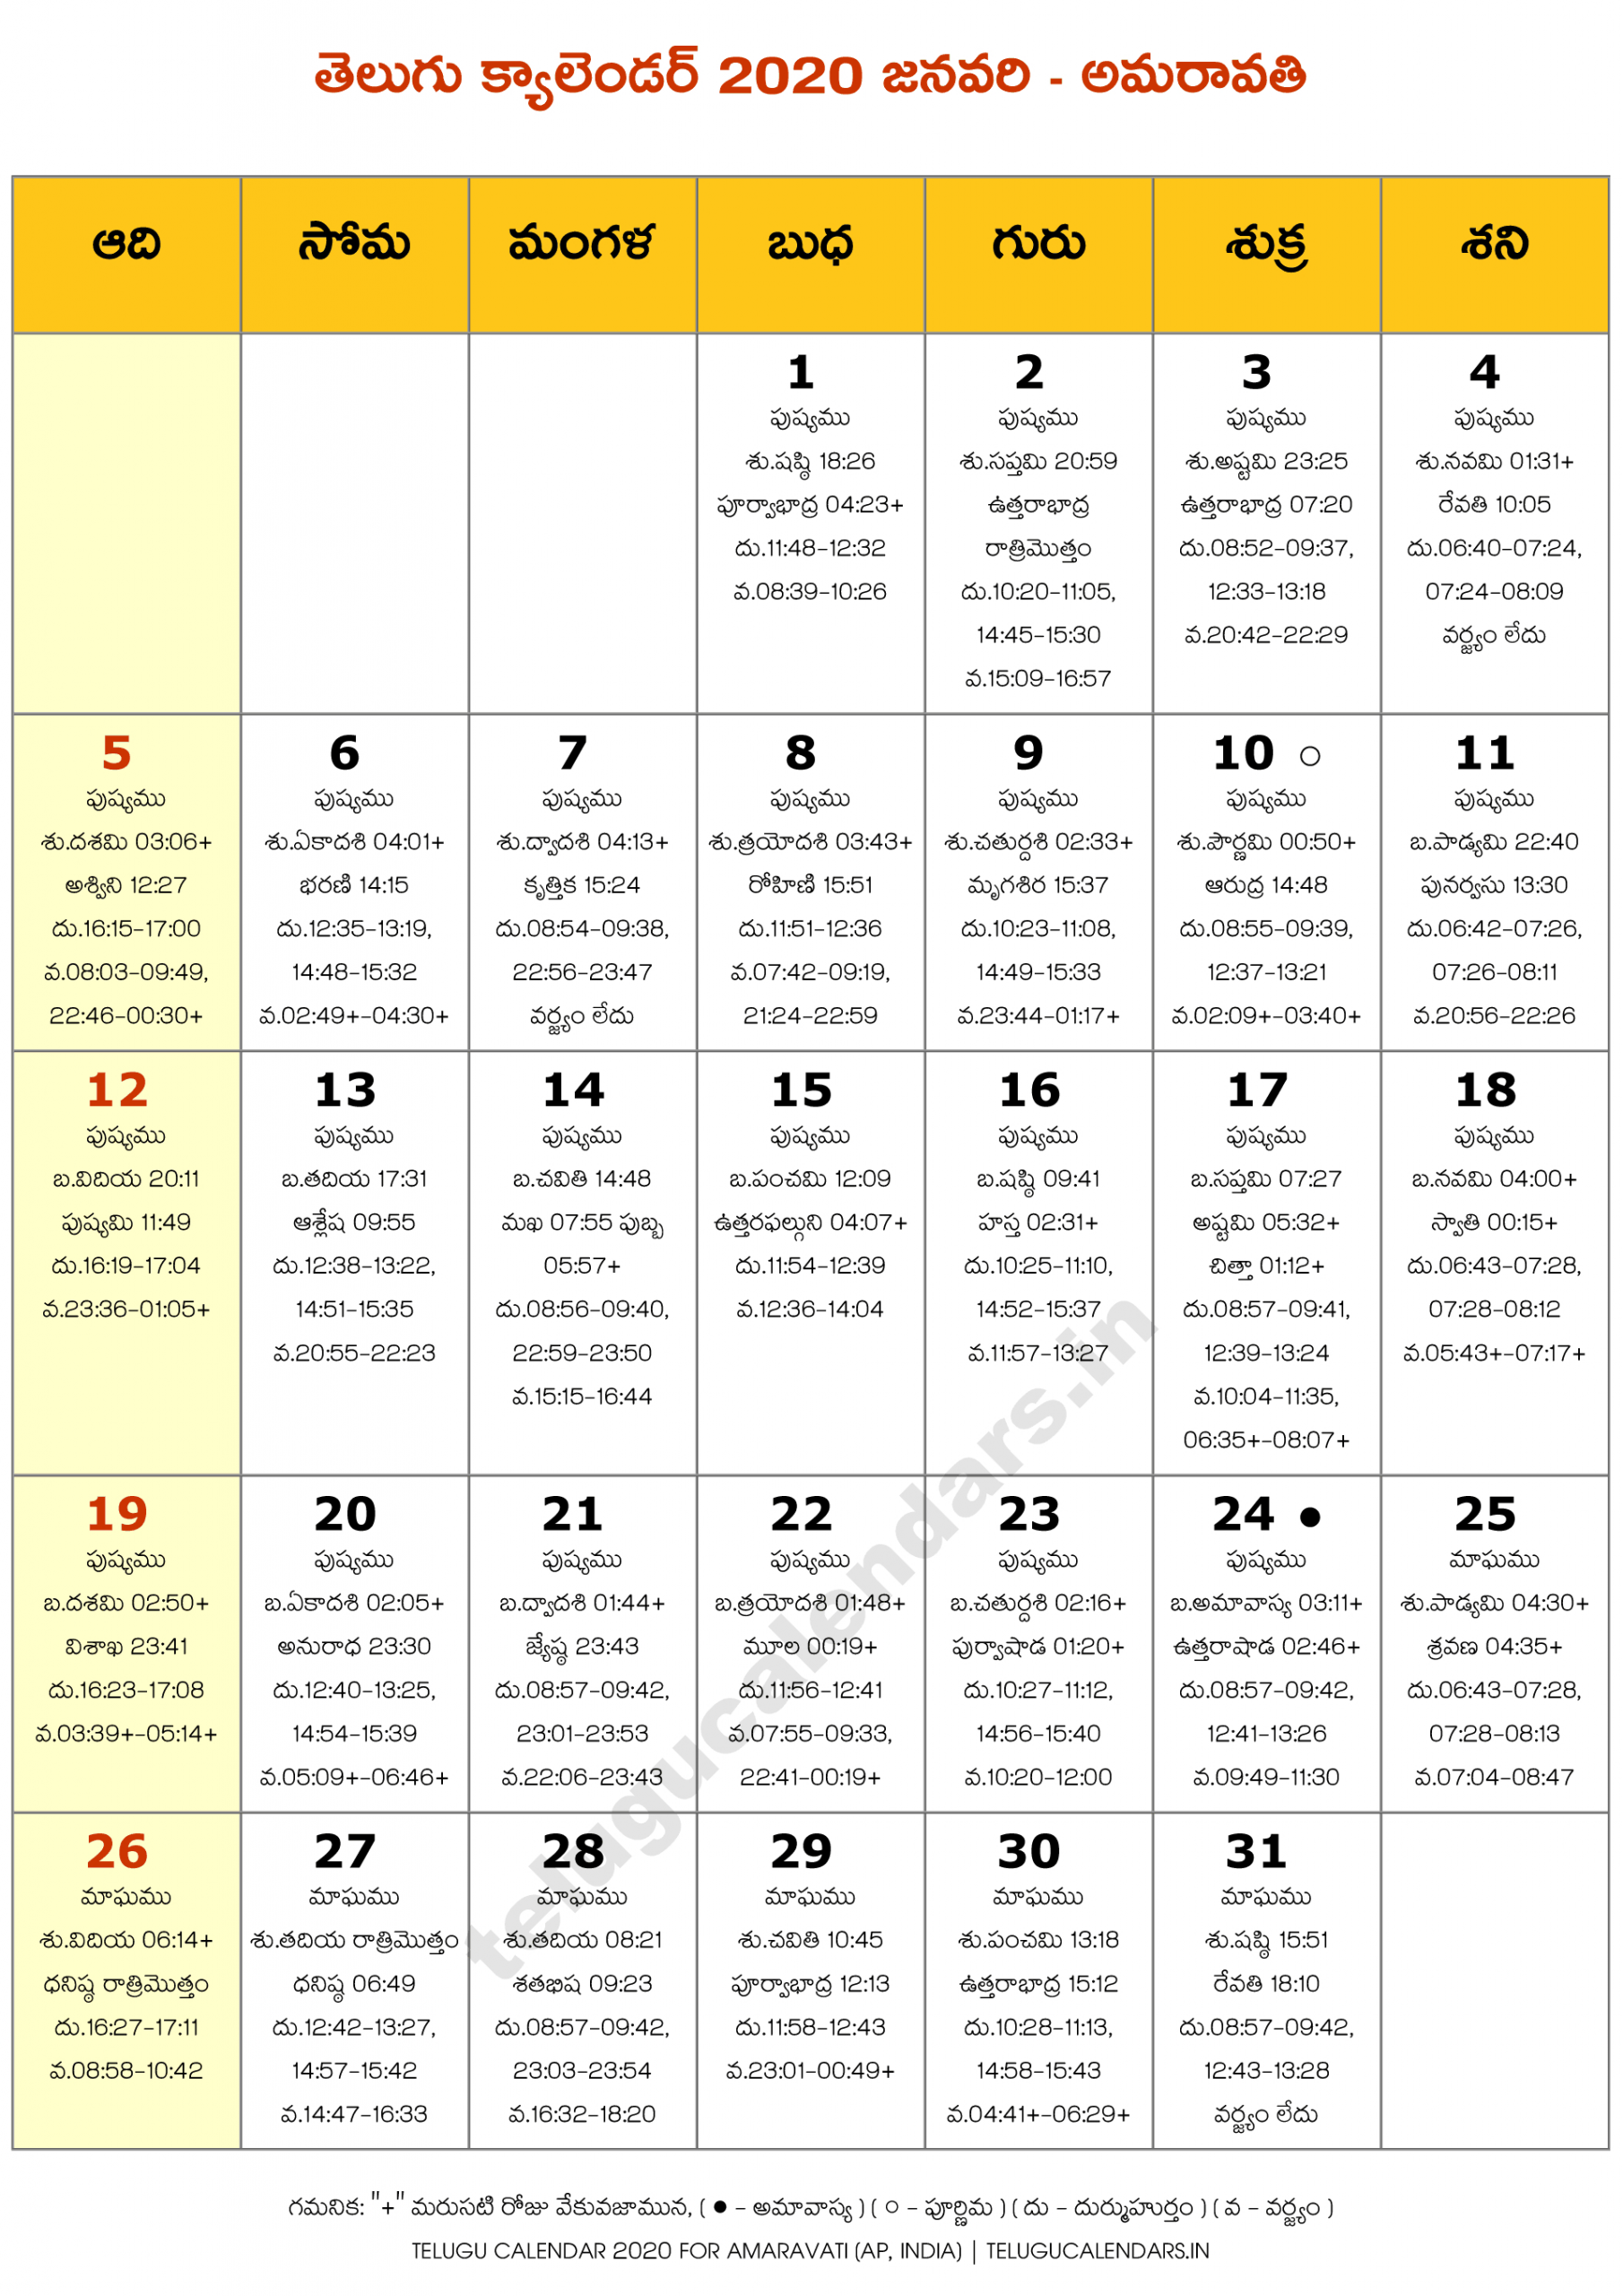 Amaravati 2020 January Telugu Calendar | Telugu Calendars